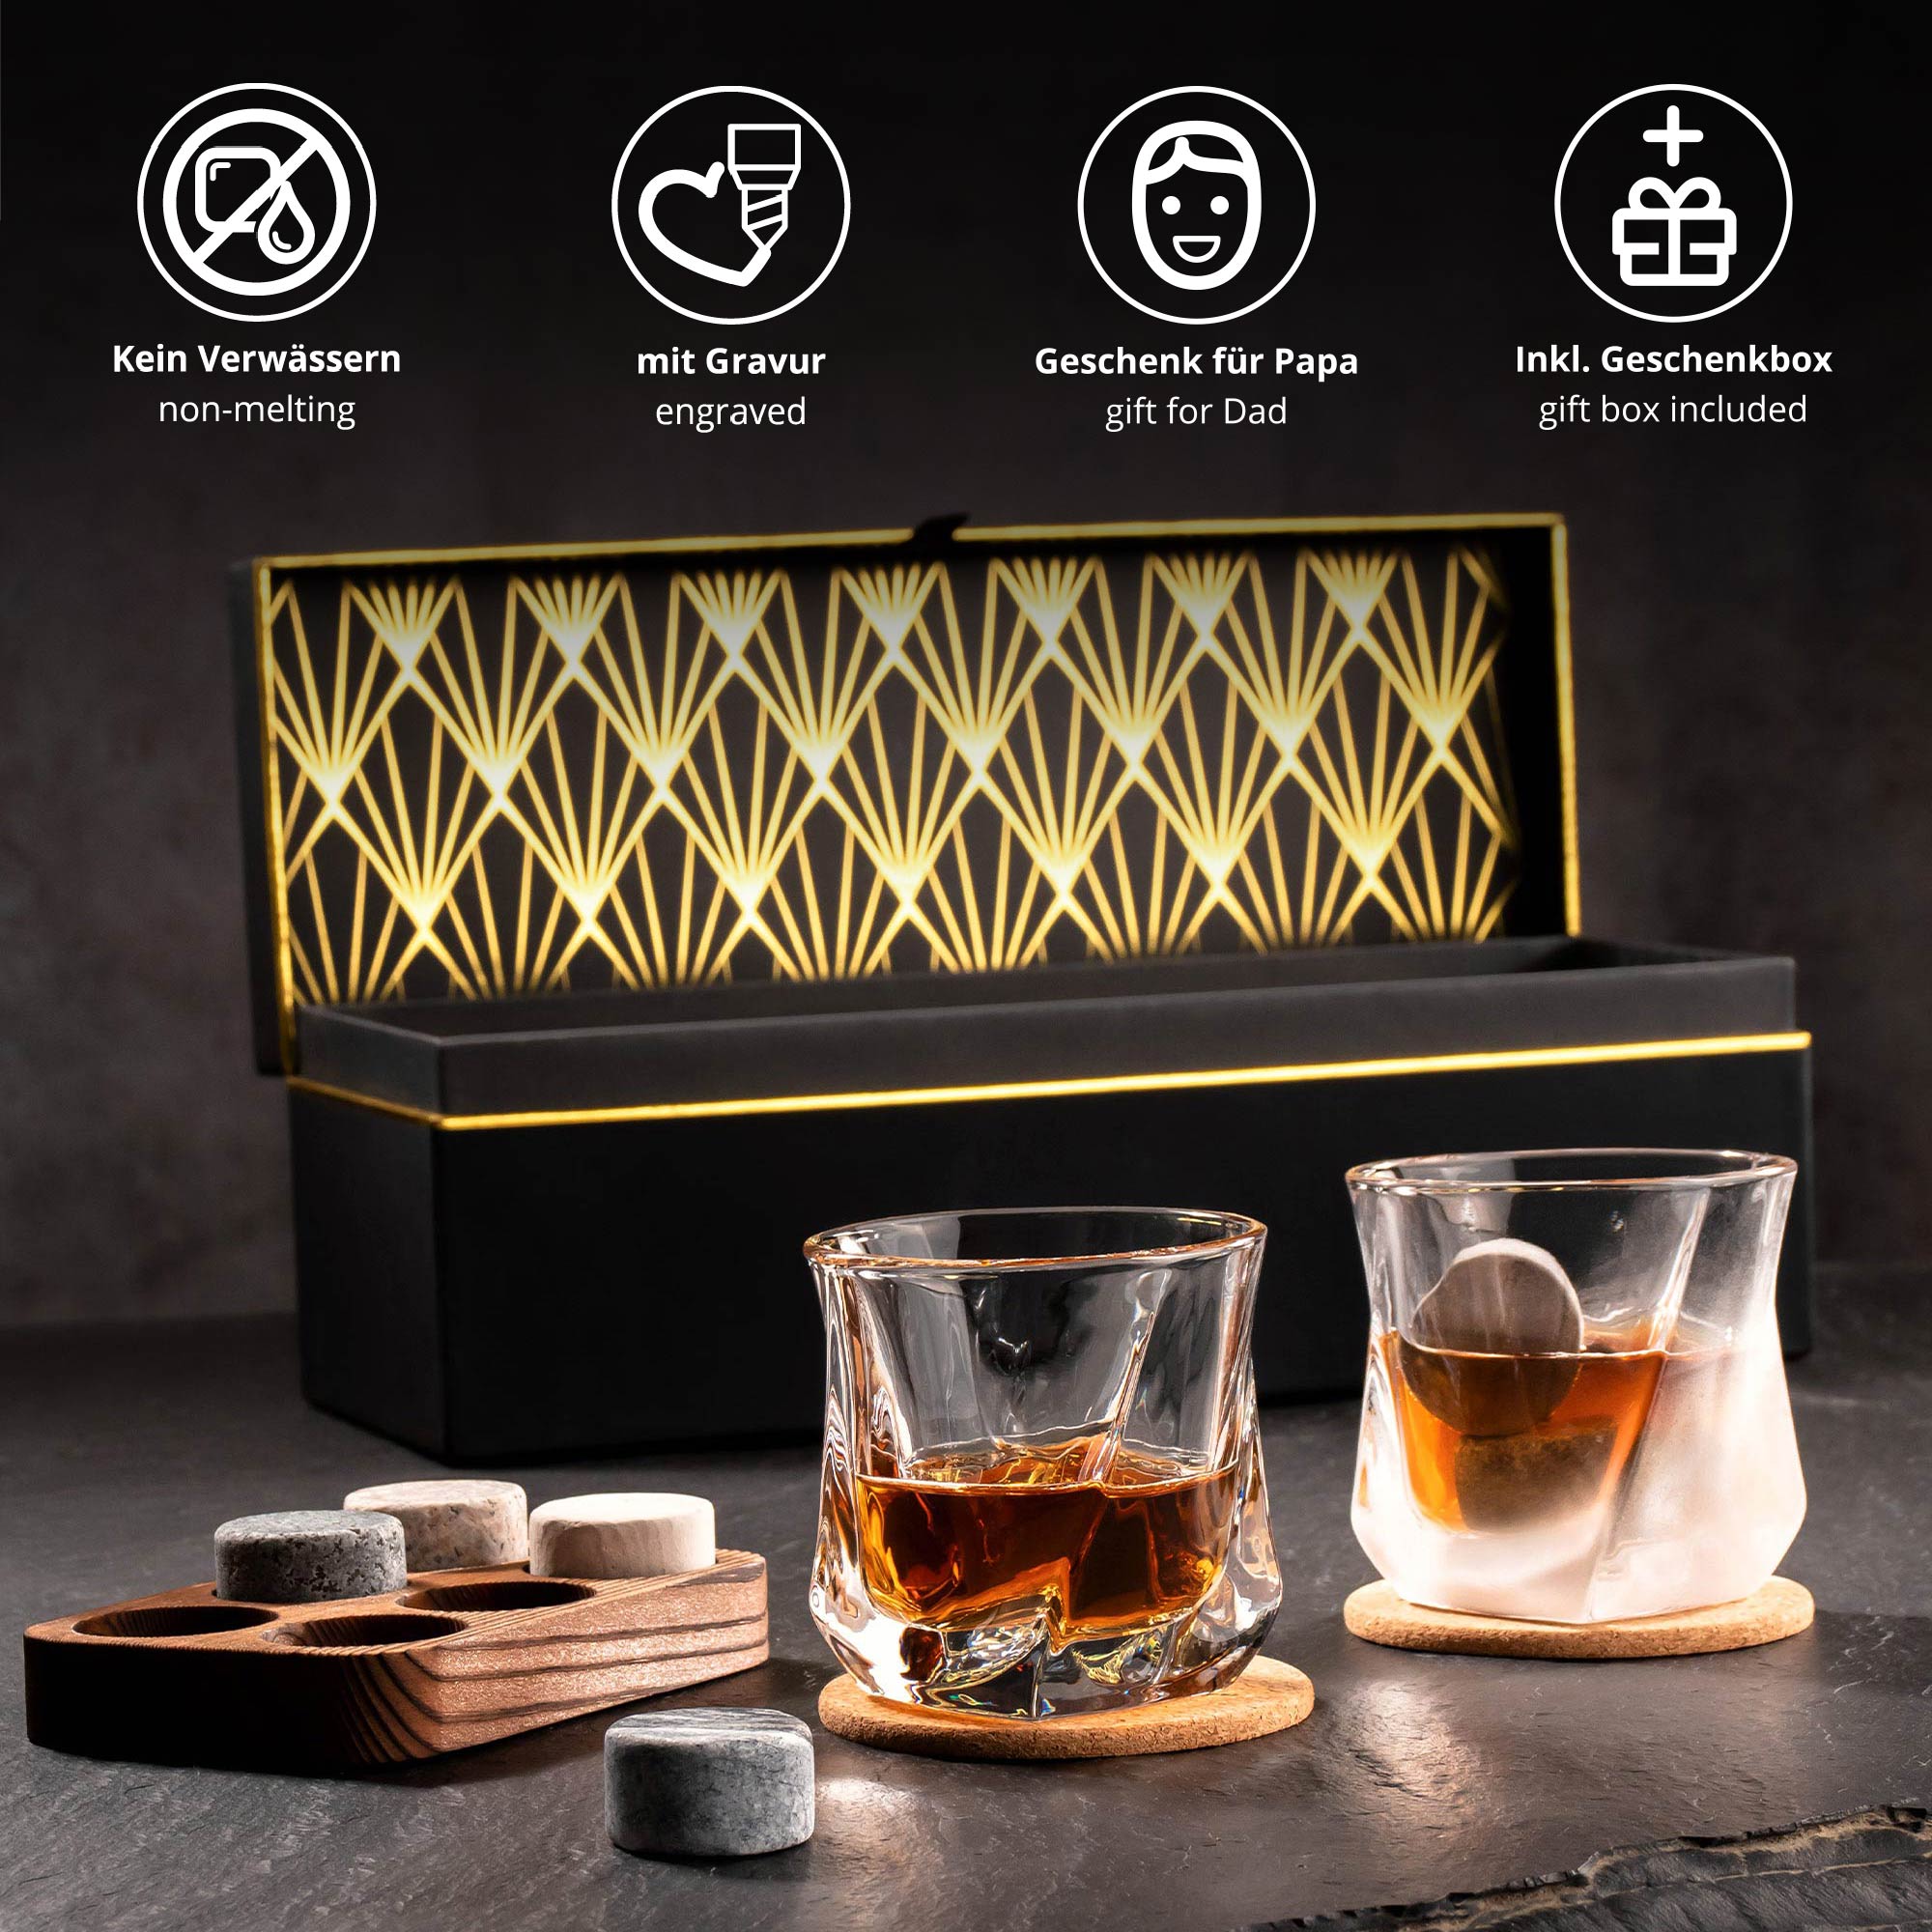 Whisky Set in edler Geschenkbox - Bester Papa 0021-0002-DE-0002 - 2